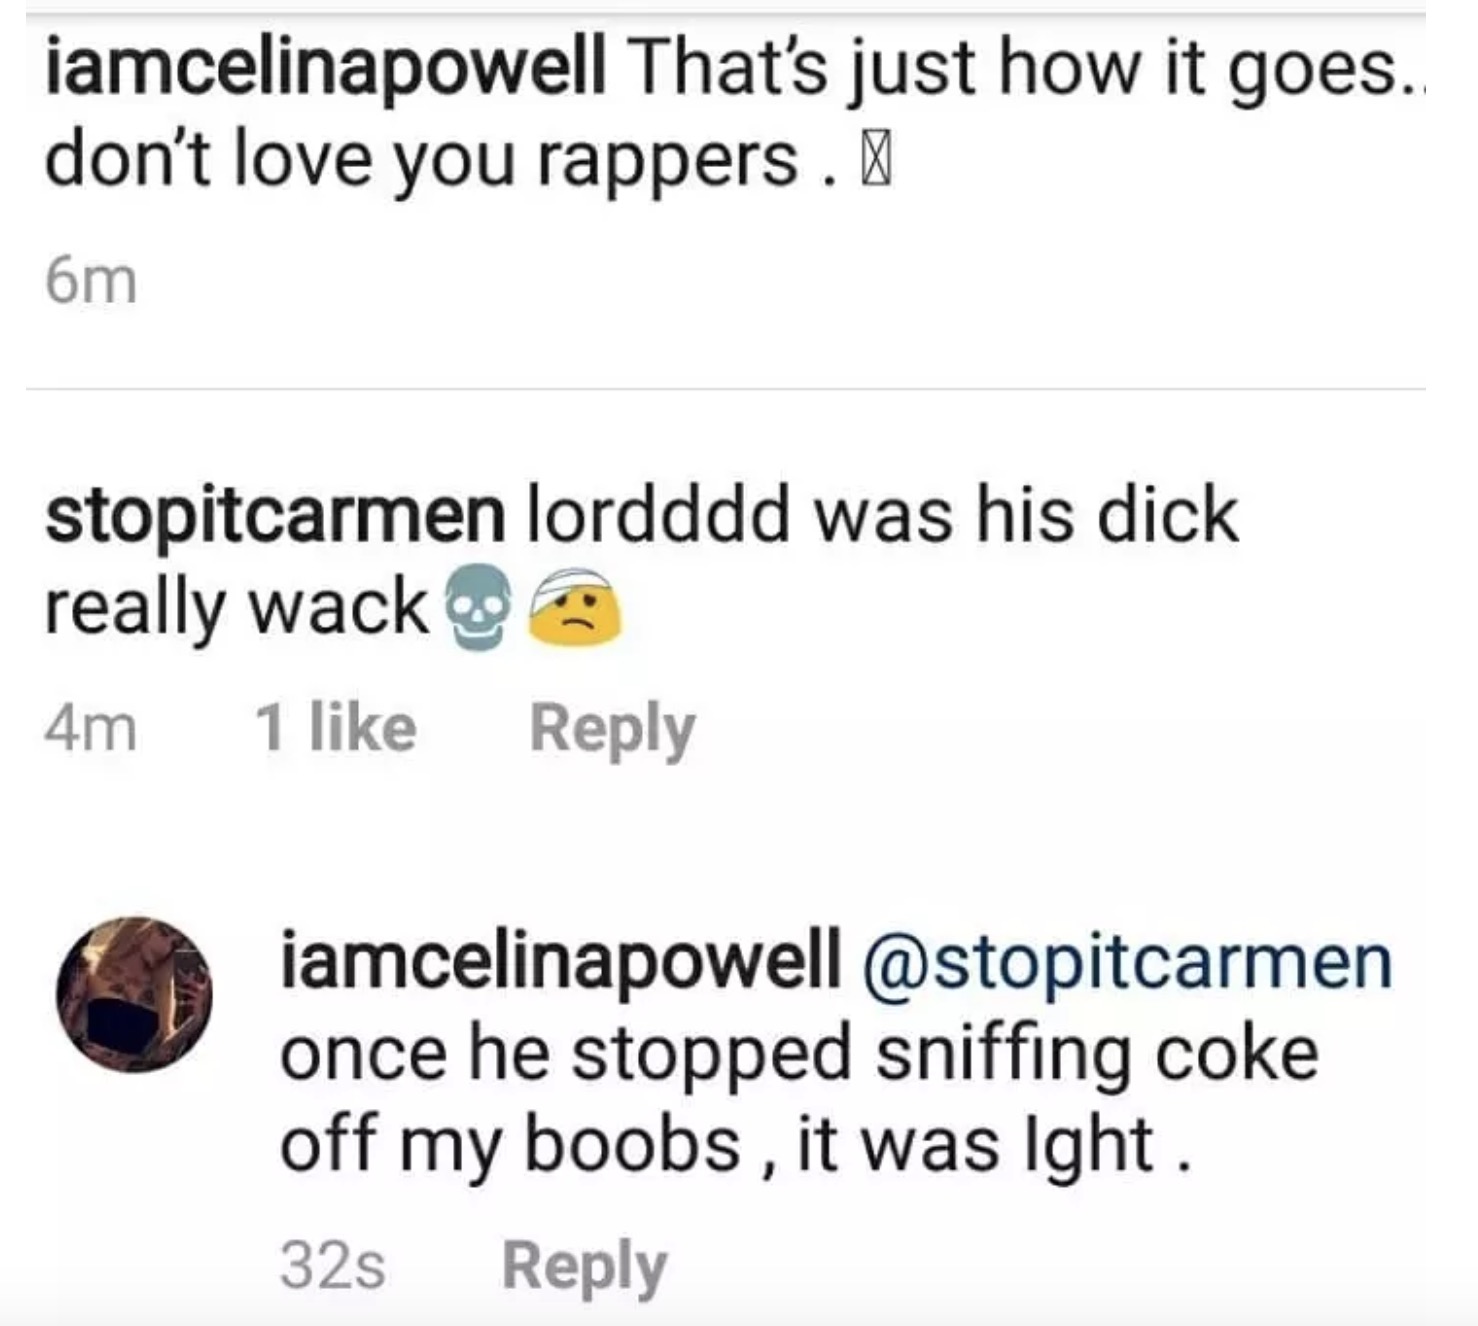 Powell leak celina Female Rapper